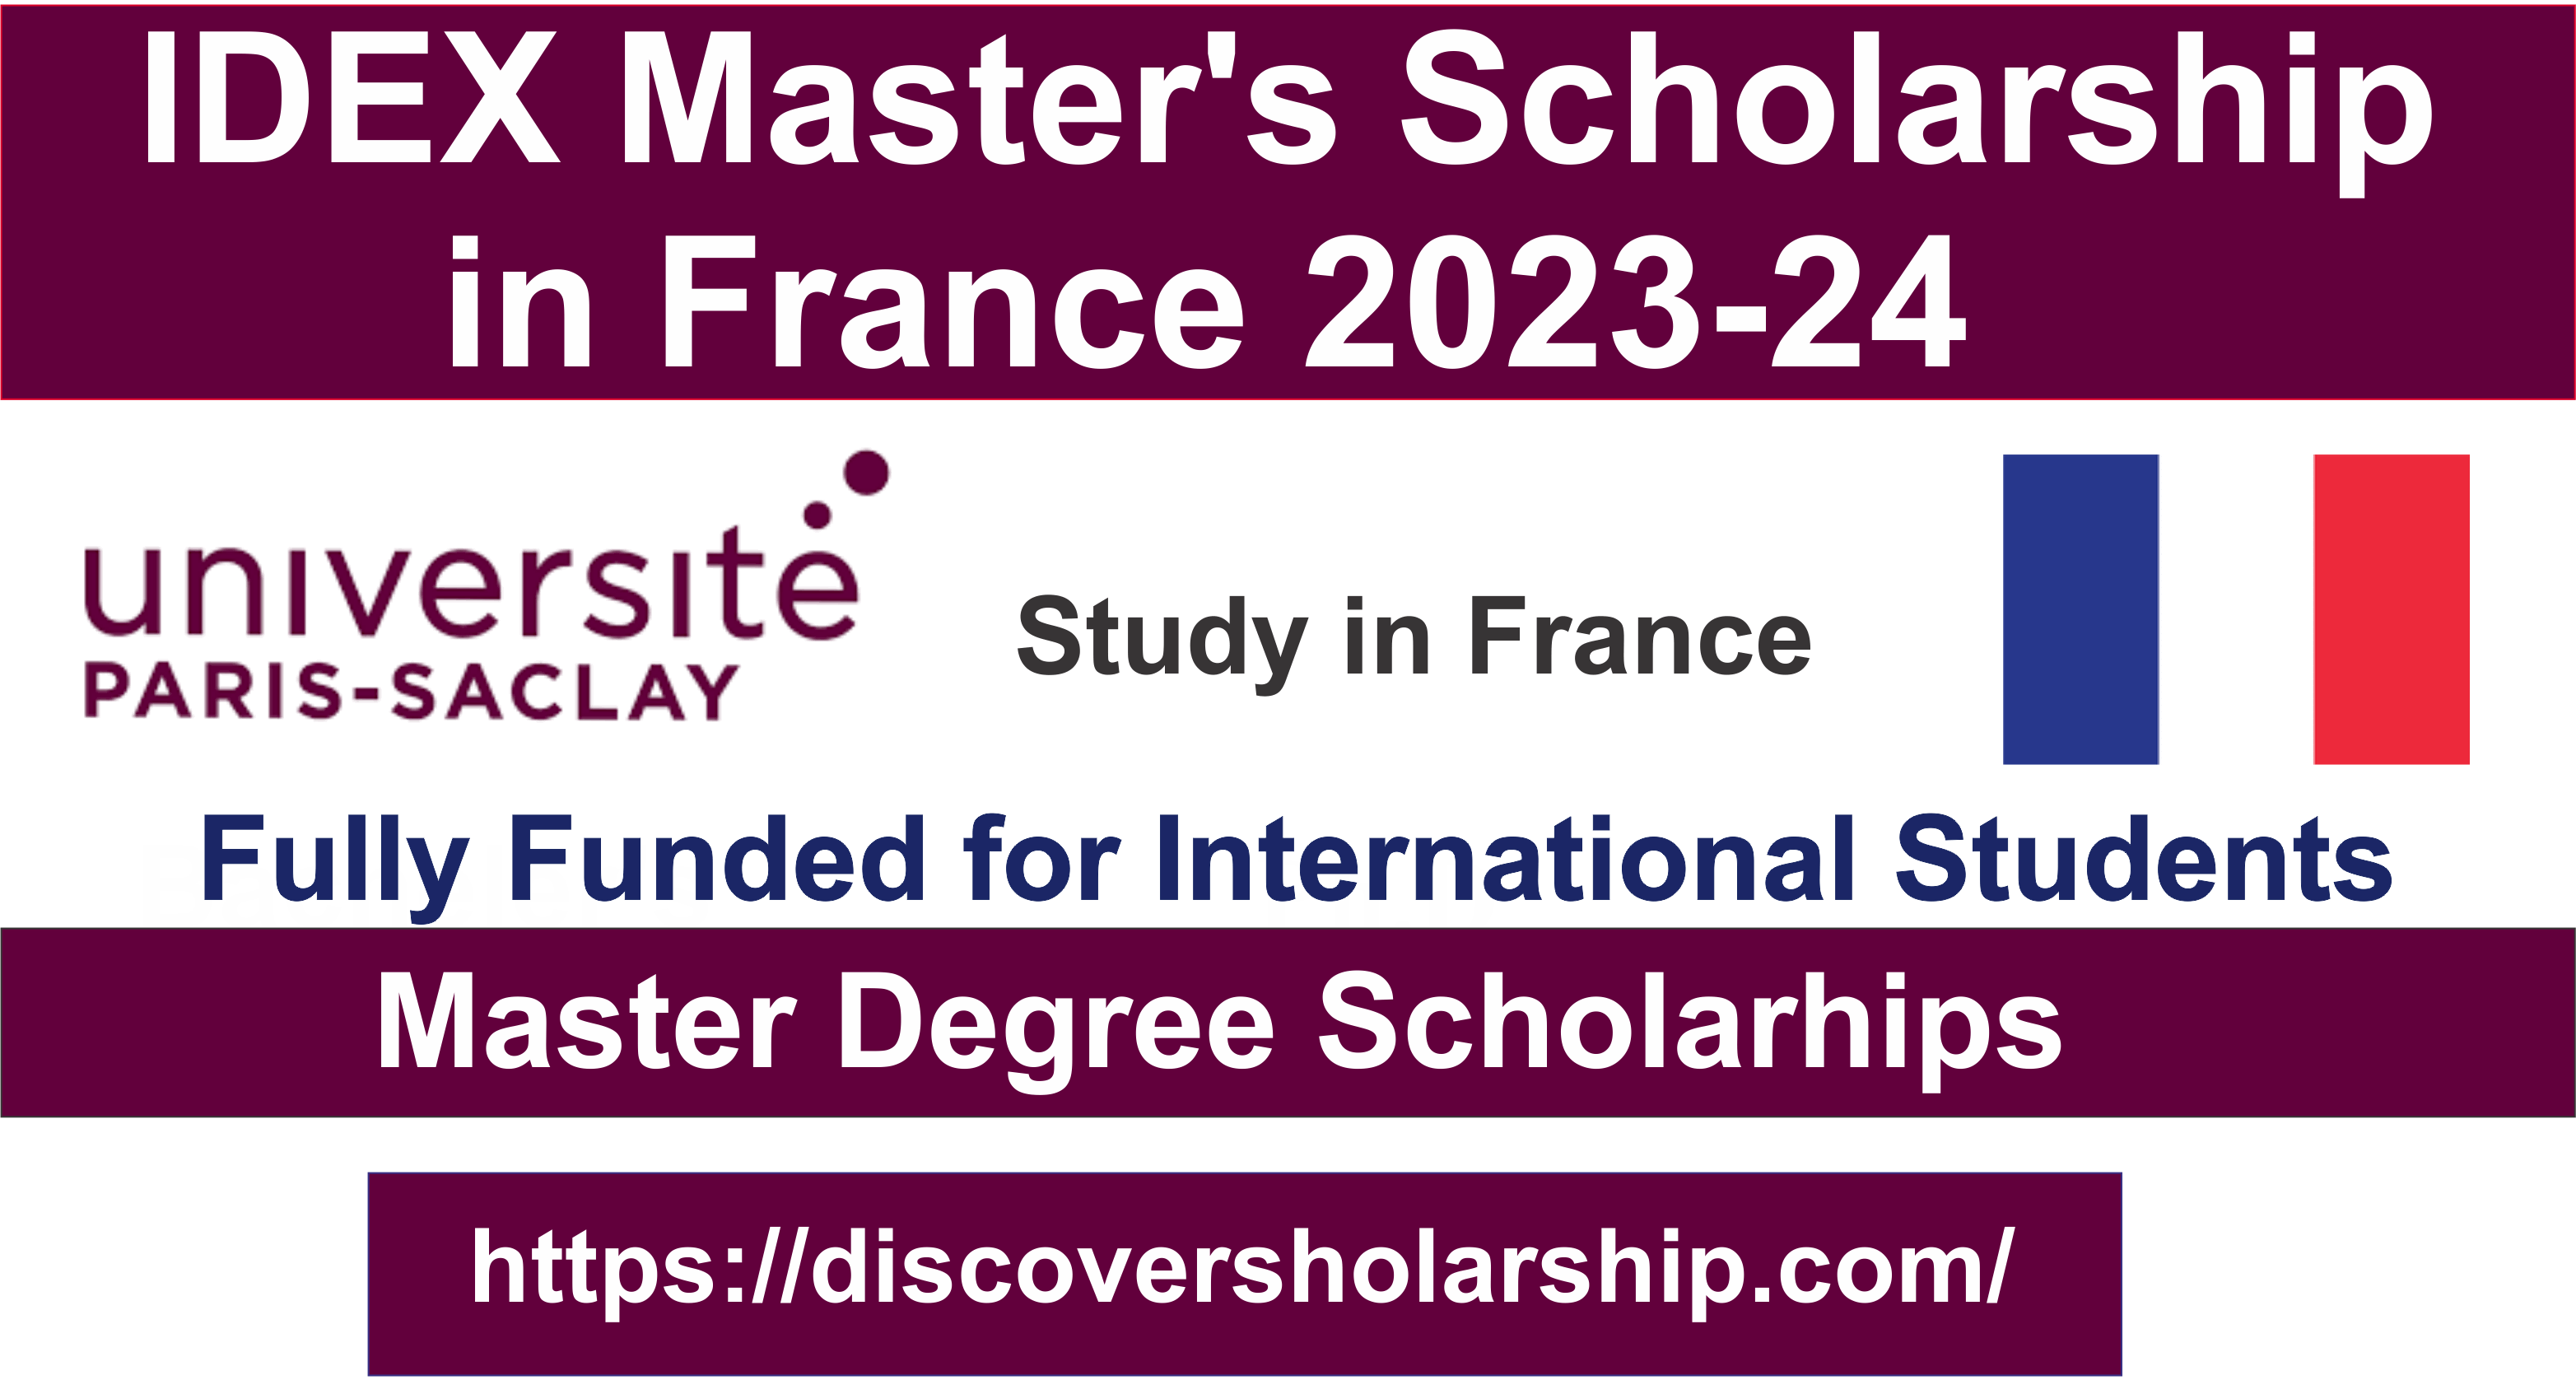 IDEX Master's Scholarship in France 2023-24